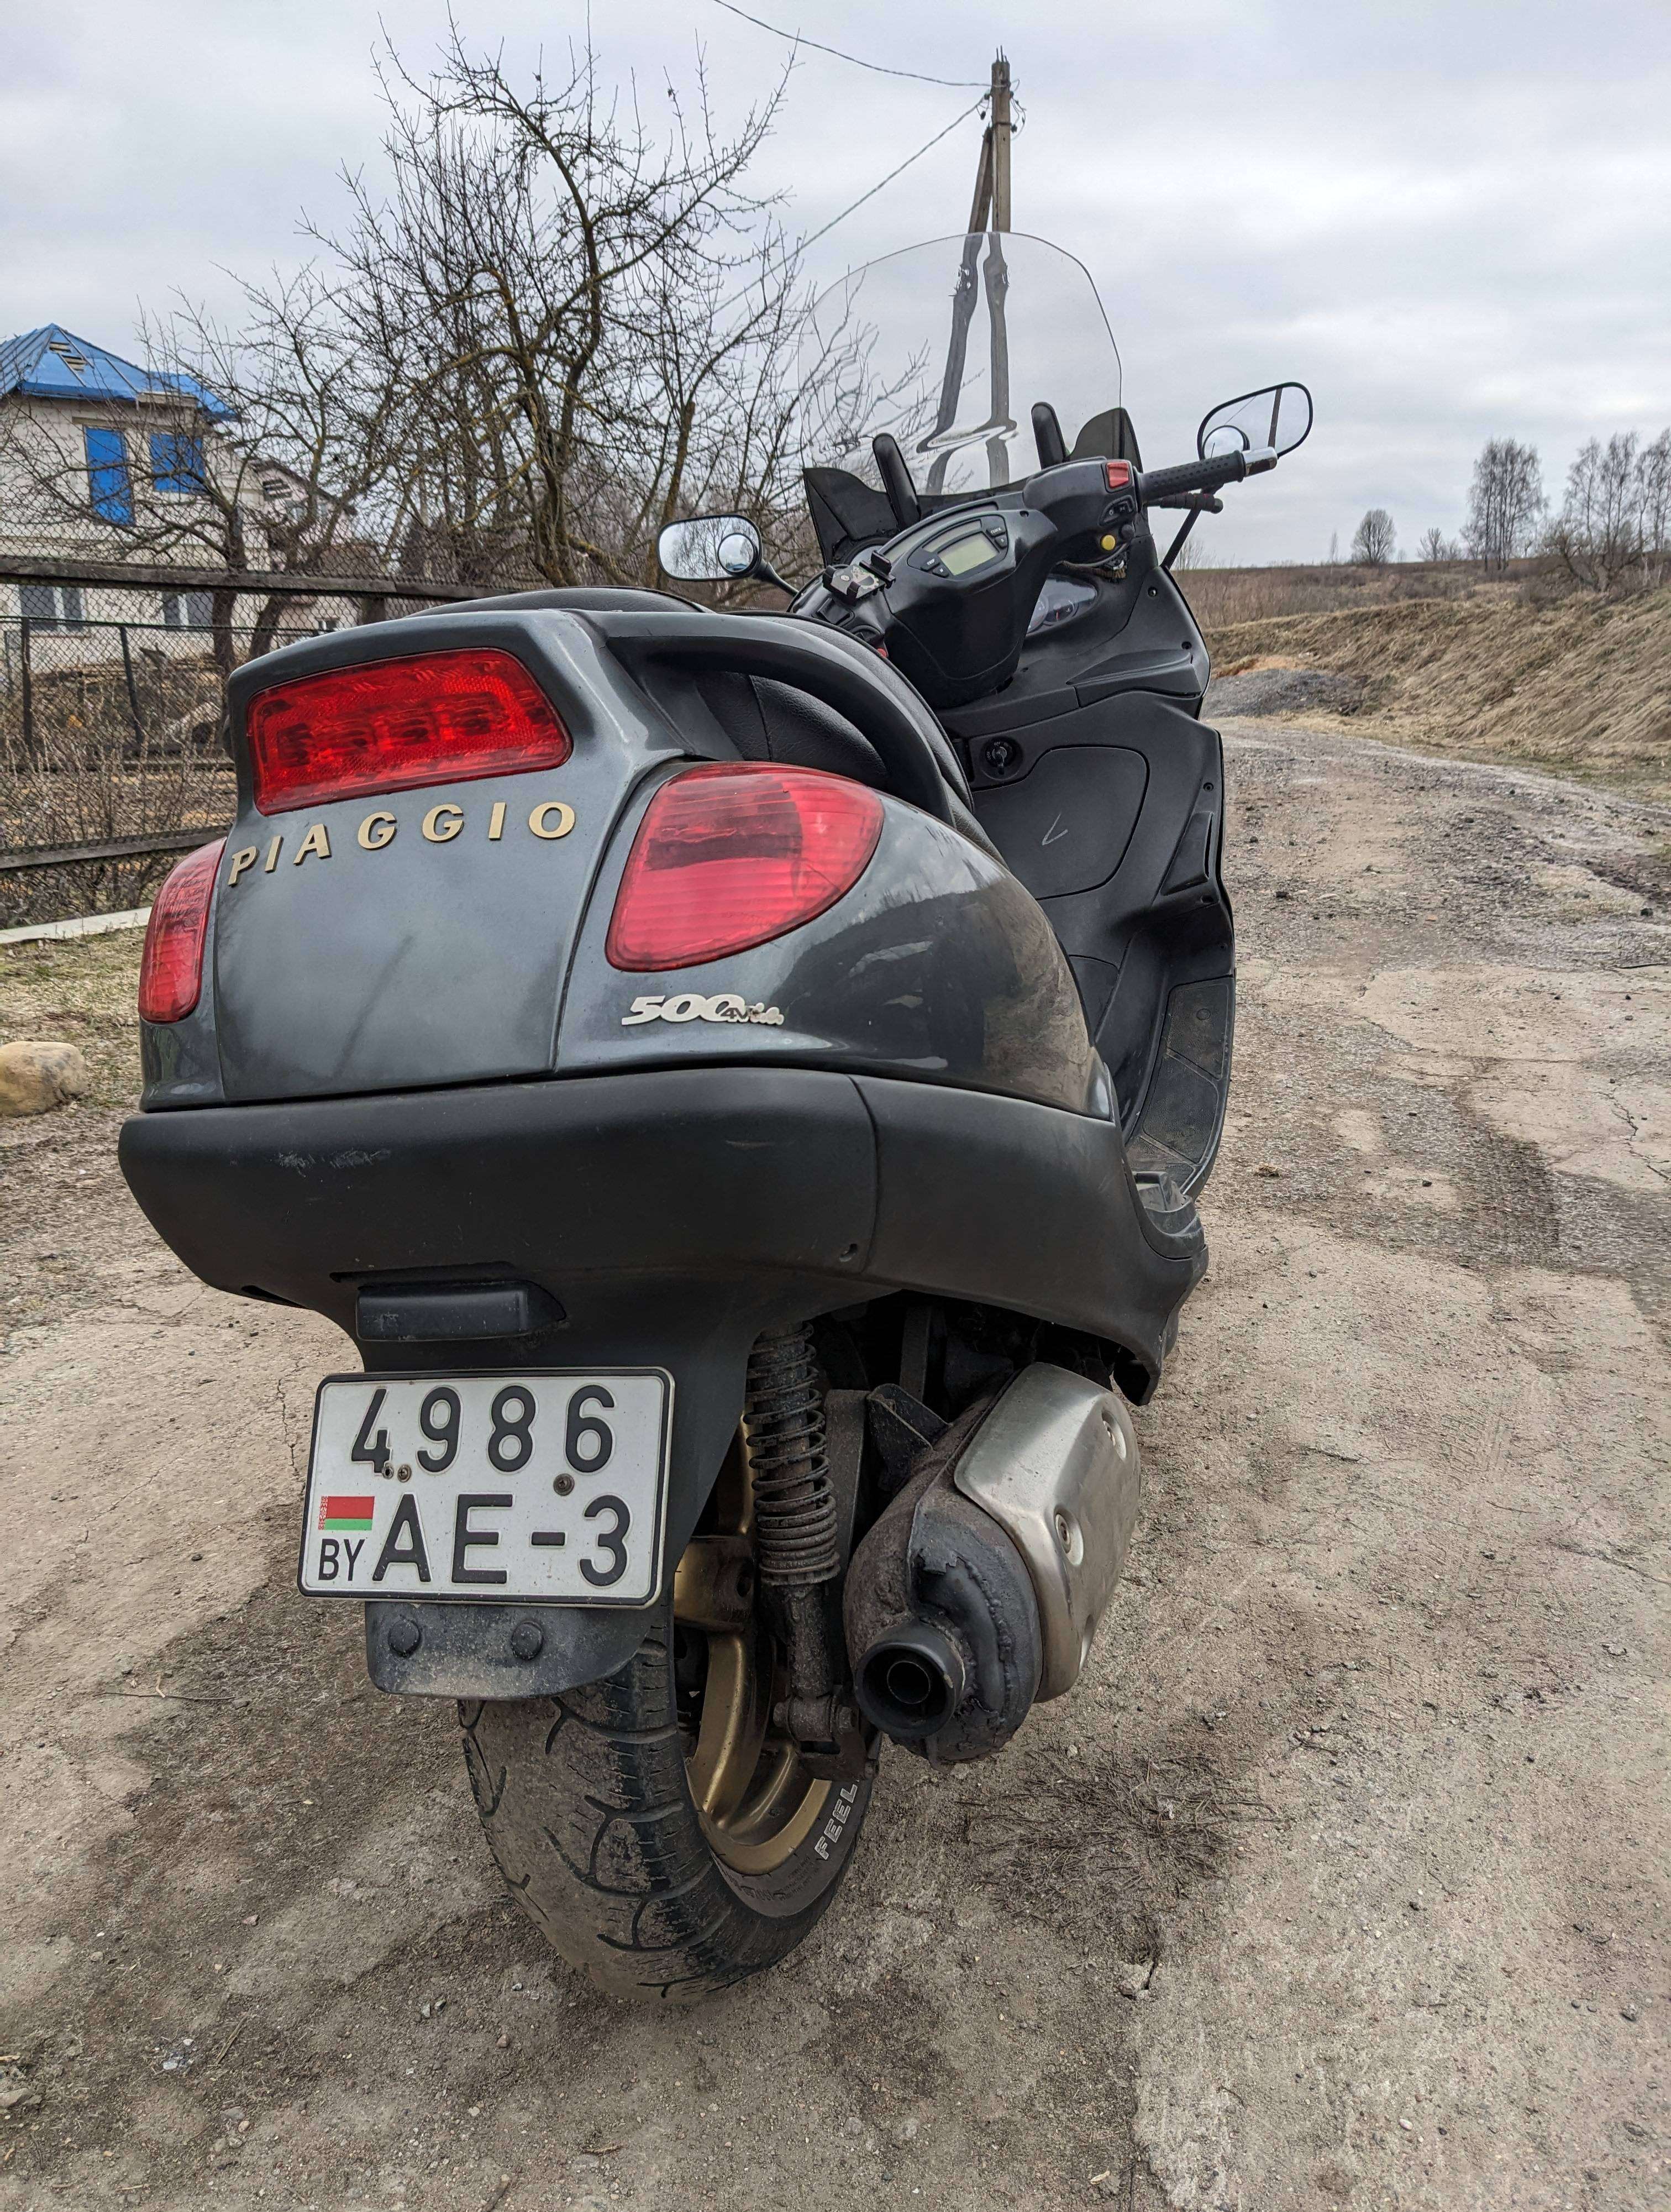 Купить скутер Piaggio X9 в Беларуси в кредит - цены, характеристики, фото. в Беларуси в кредит